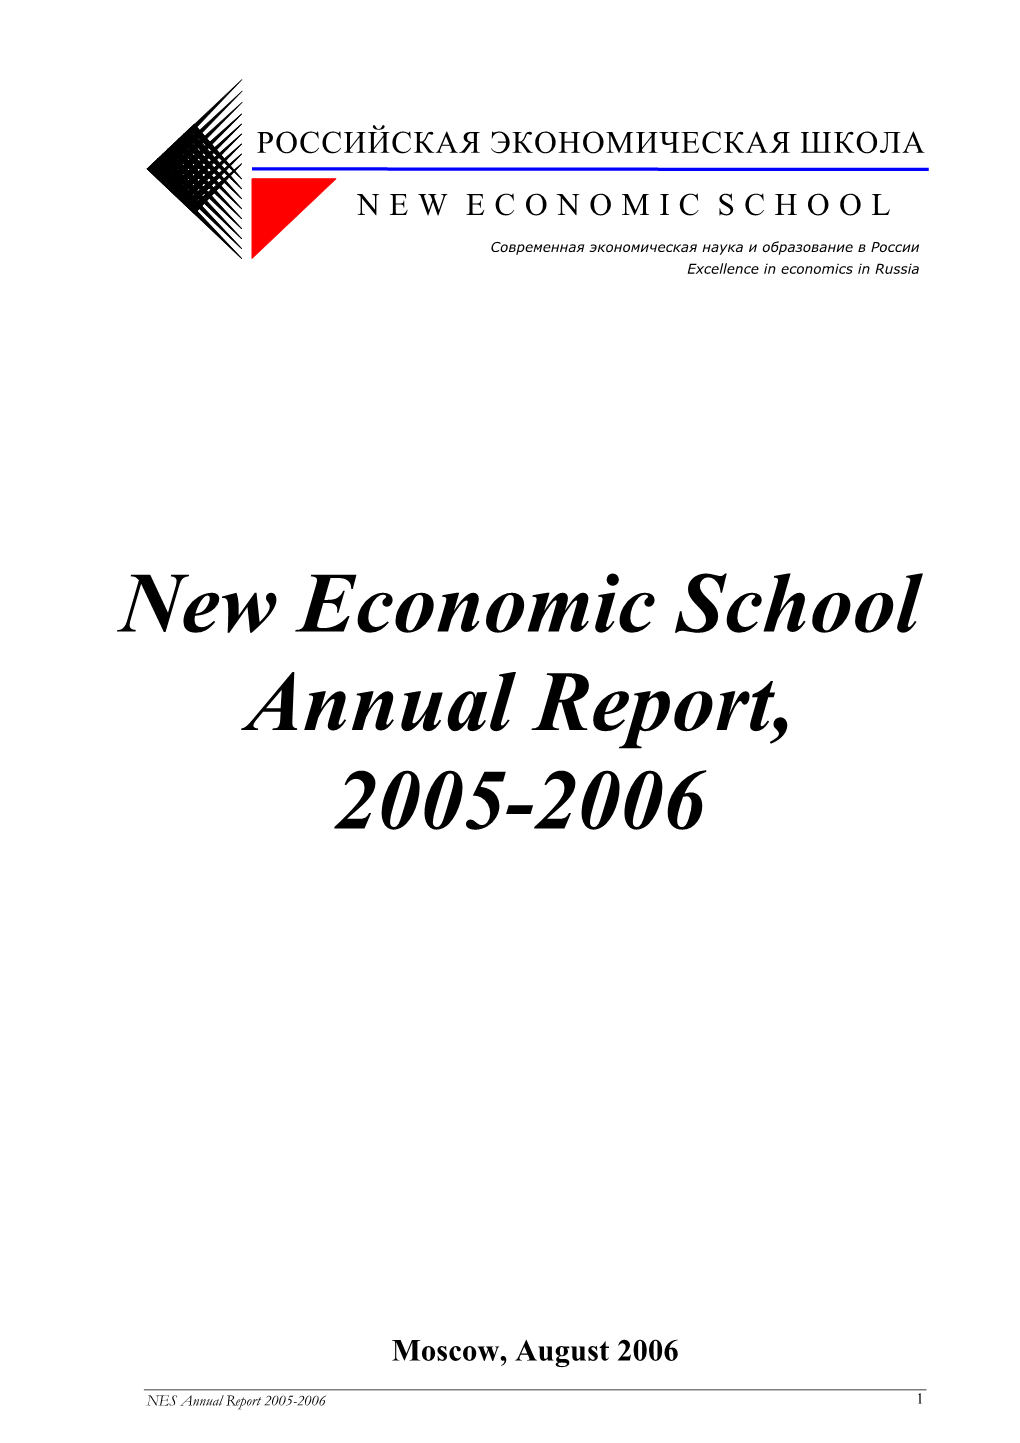 New Economic School Annual Report, 2005-2006